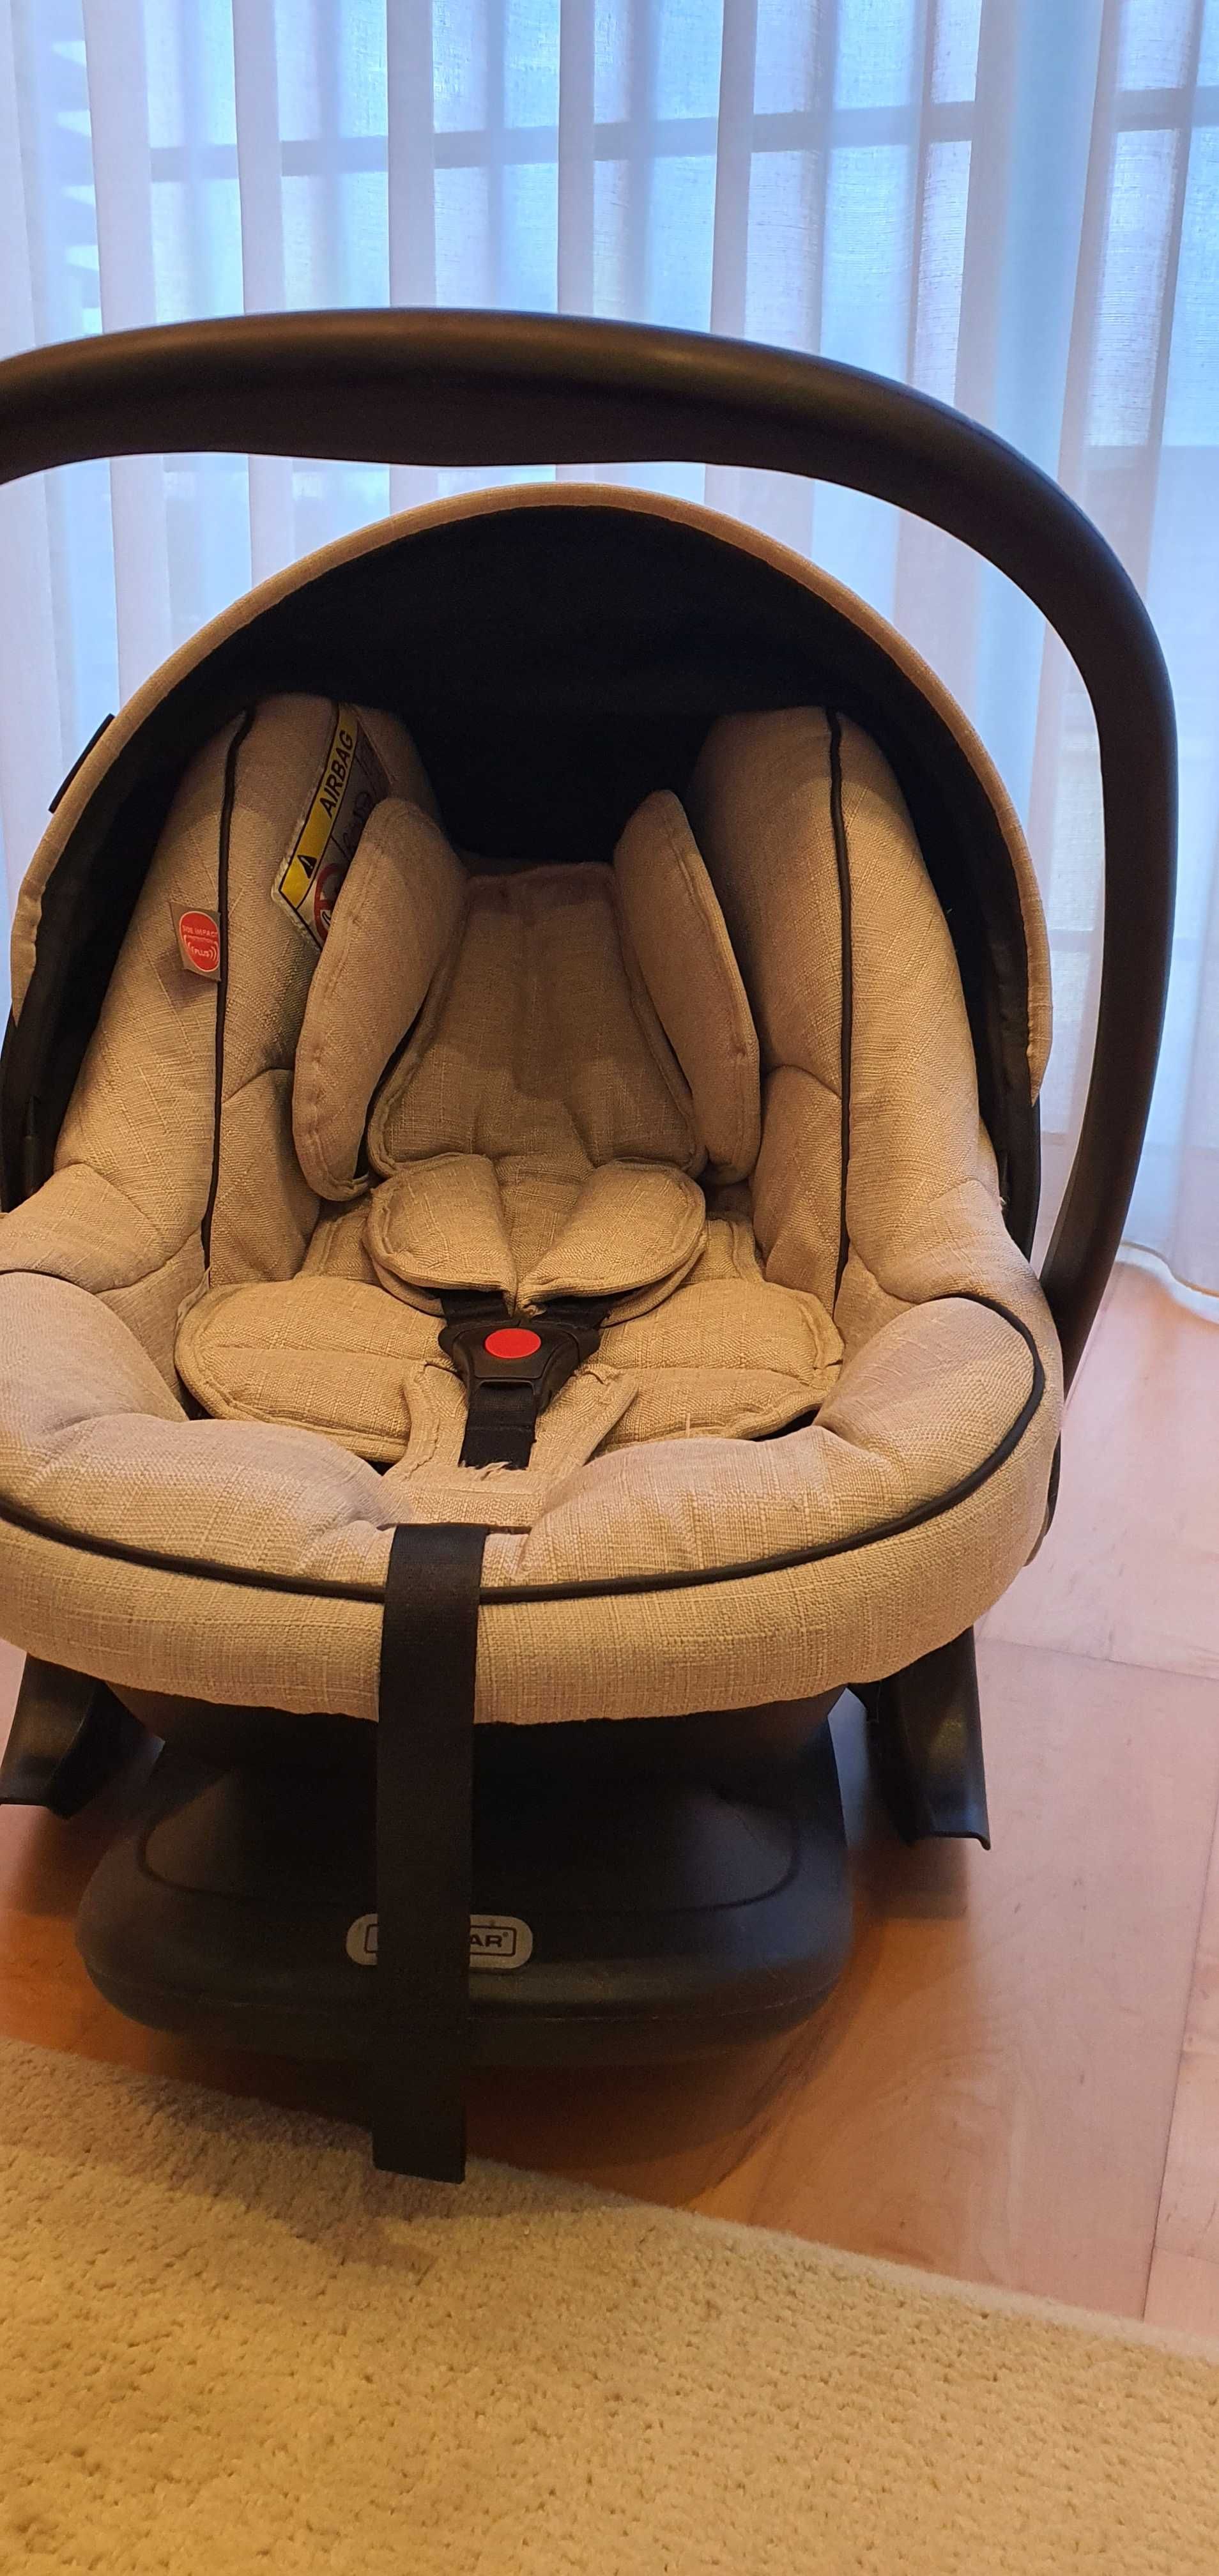 Cadeira de bebé - Categoria 0 - Bebecar - Easymax XL